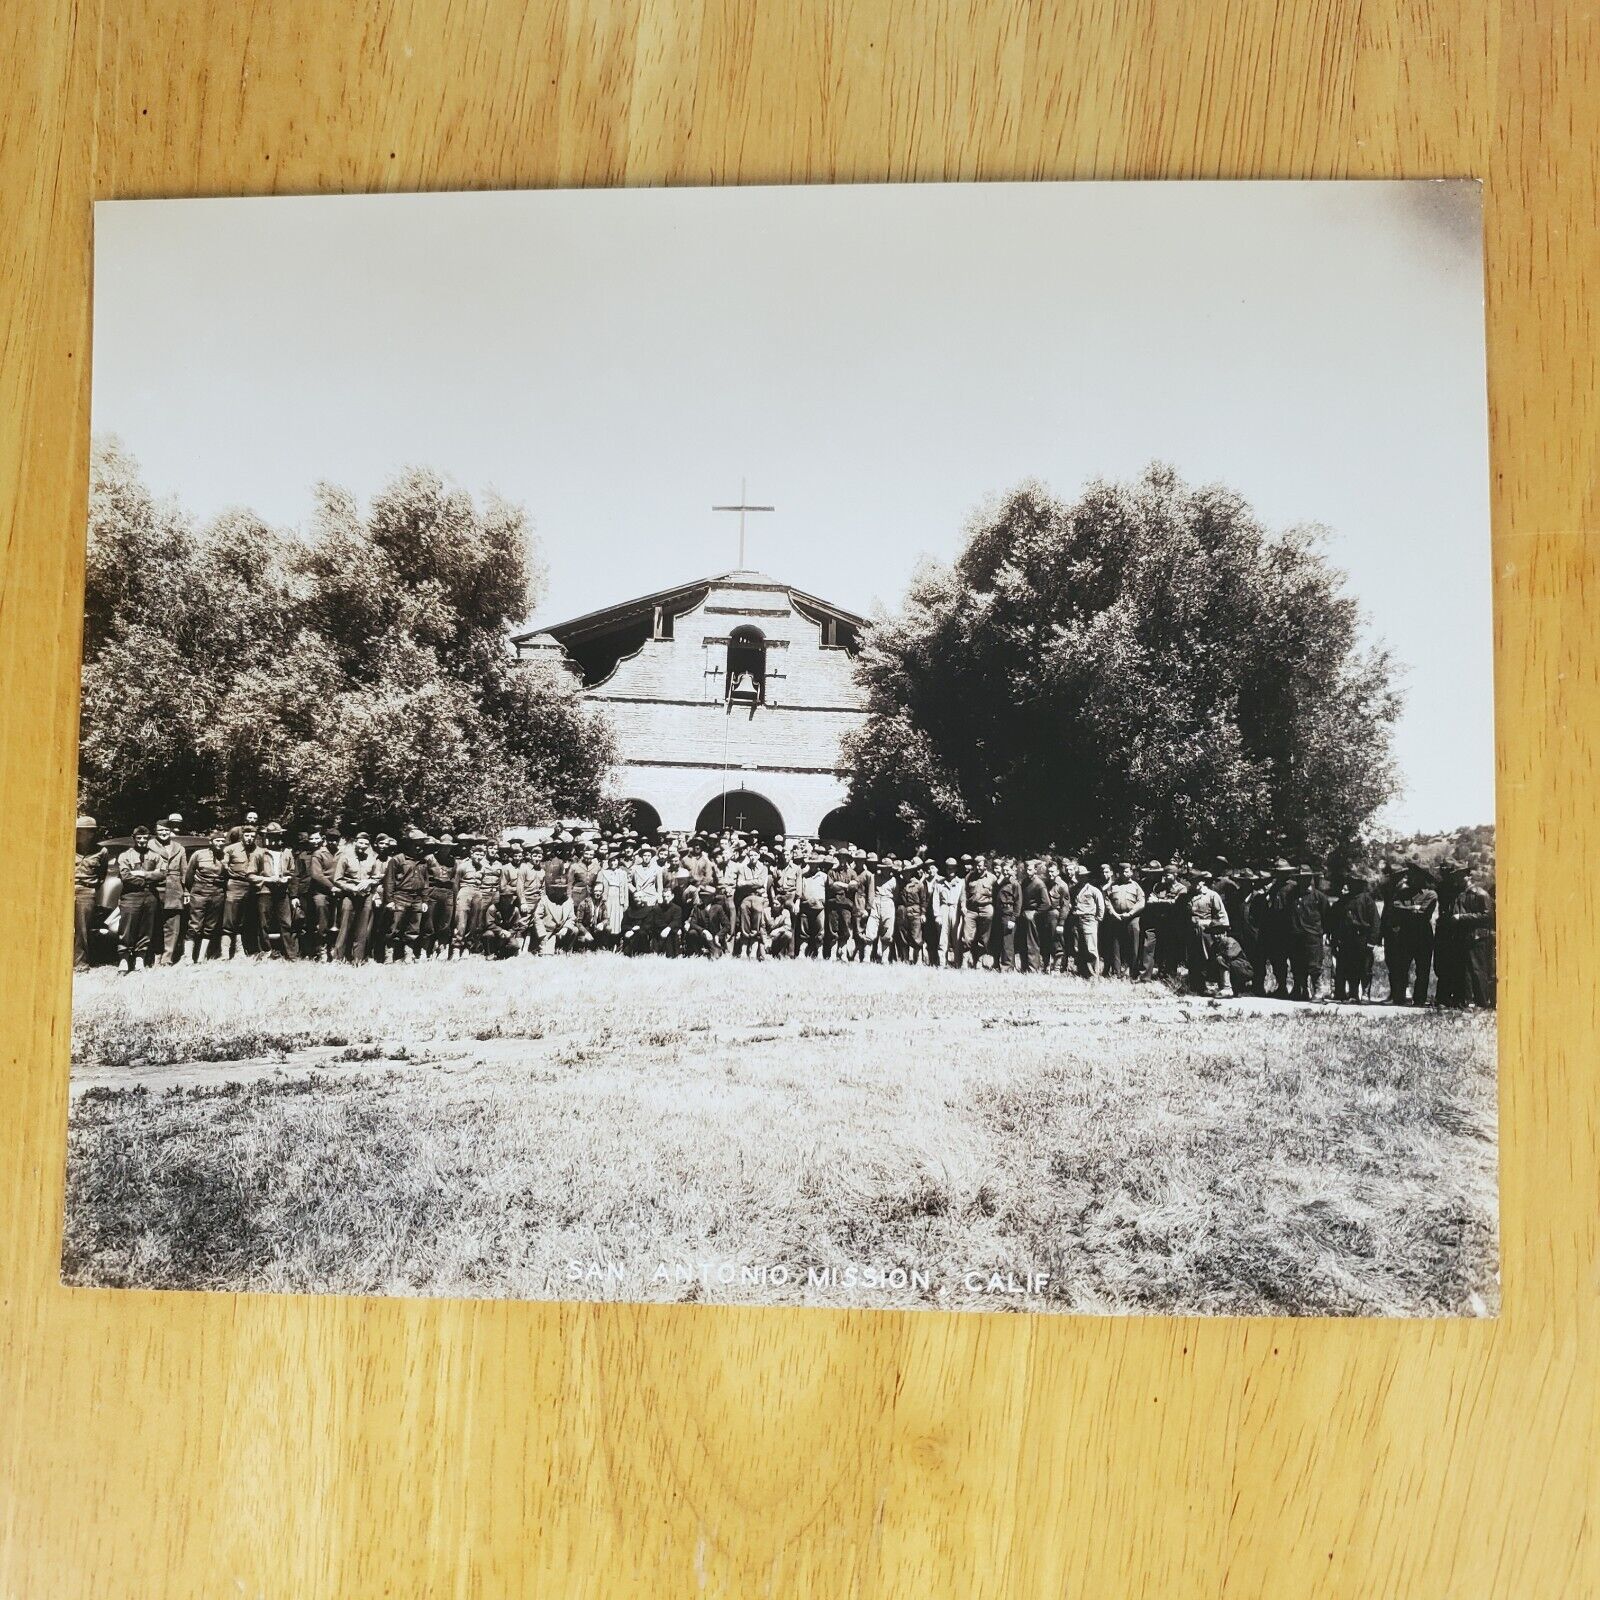 San Antonio Mission California 1930s Vintage Photograph 8x10 B&W People Standing